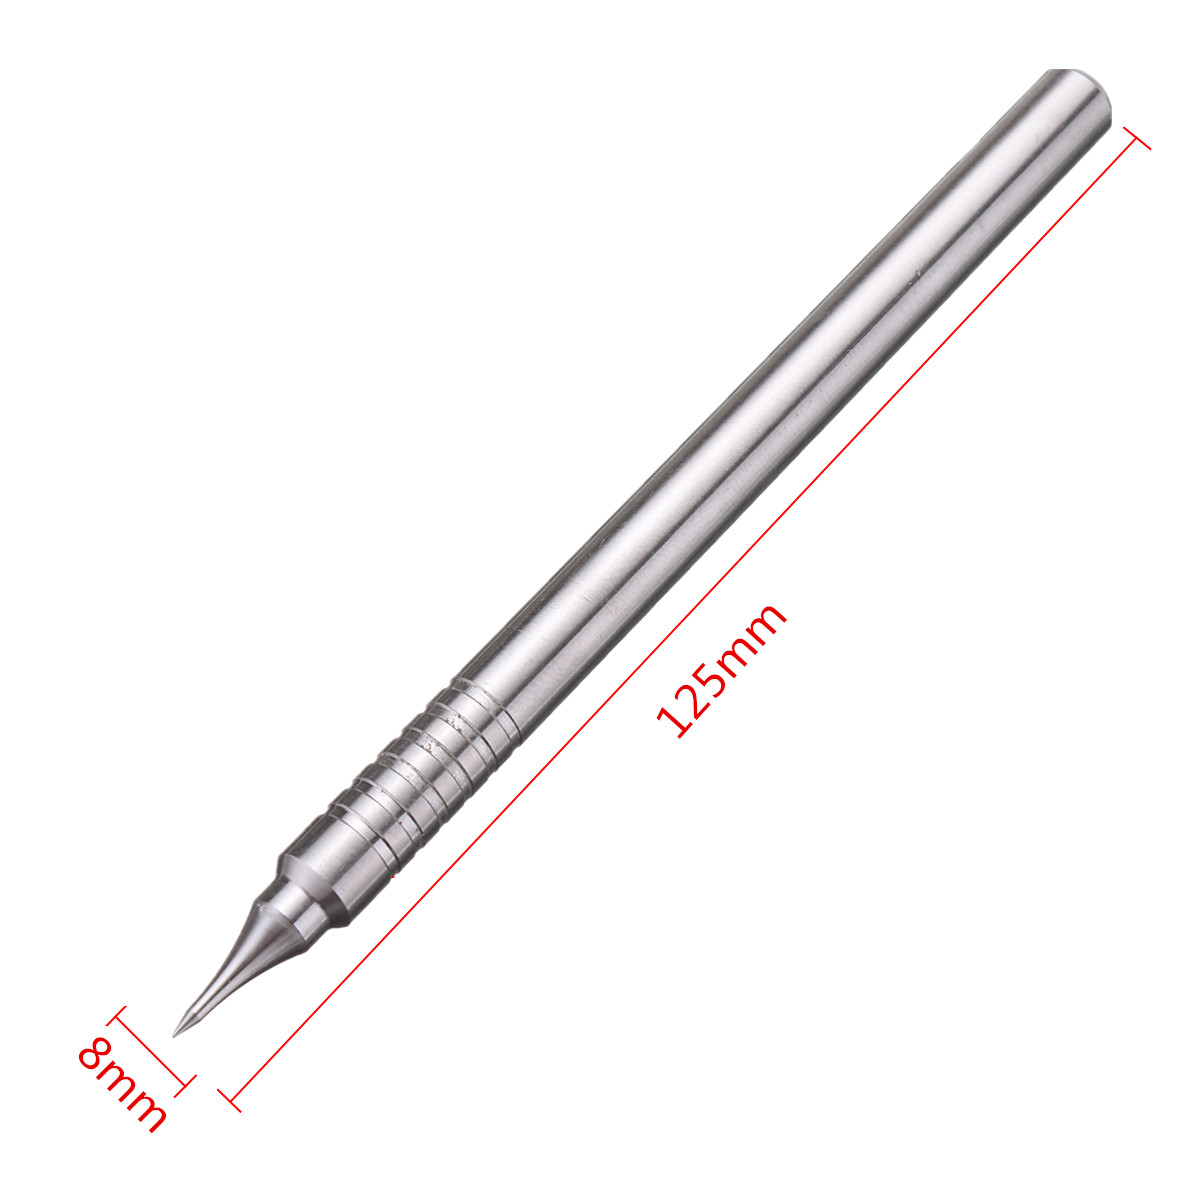 Lightweight Modeling Tools Part Scriber Craft Tool Scribe Line Chisel 0.2-1mm 